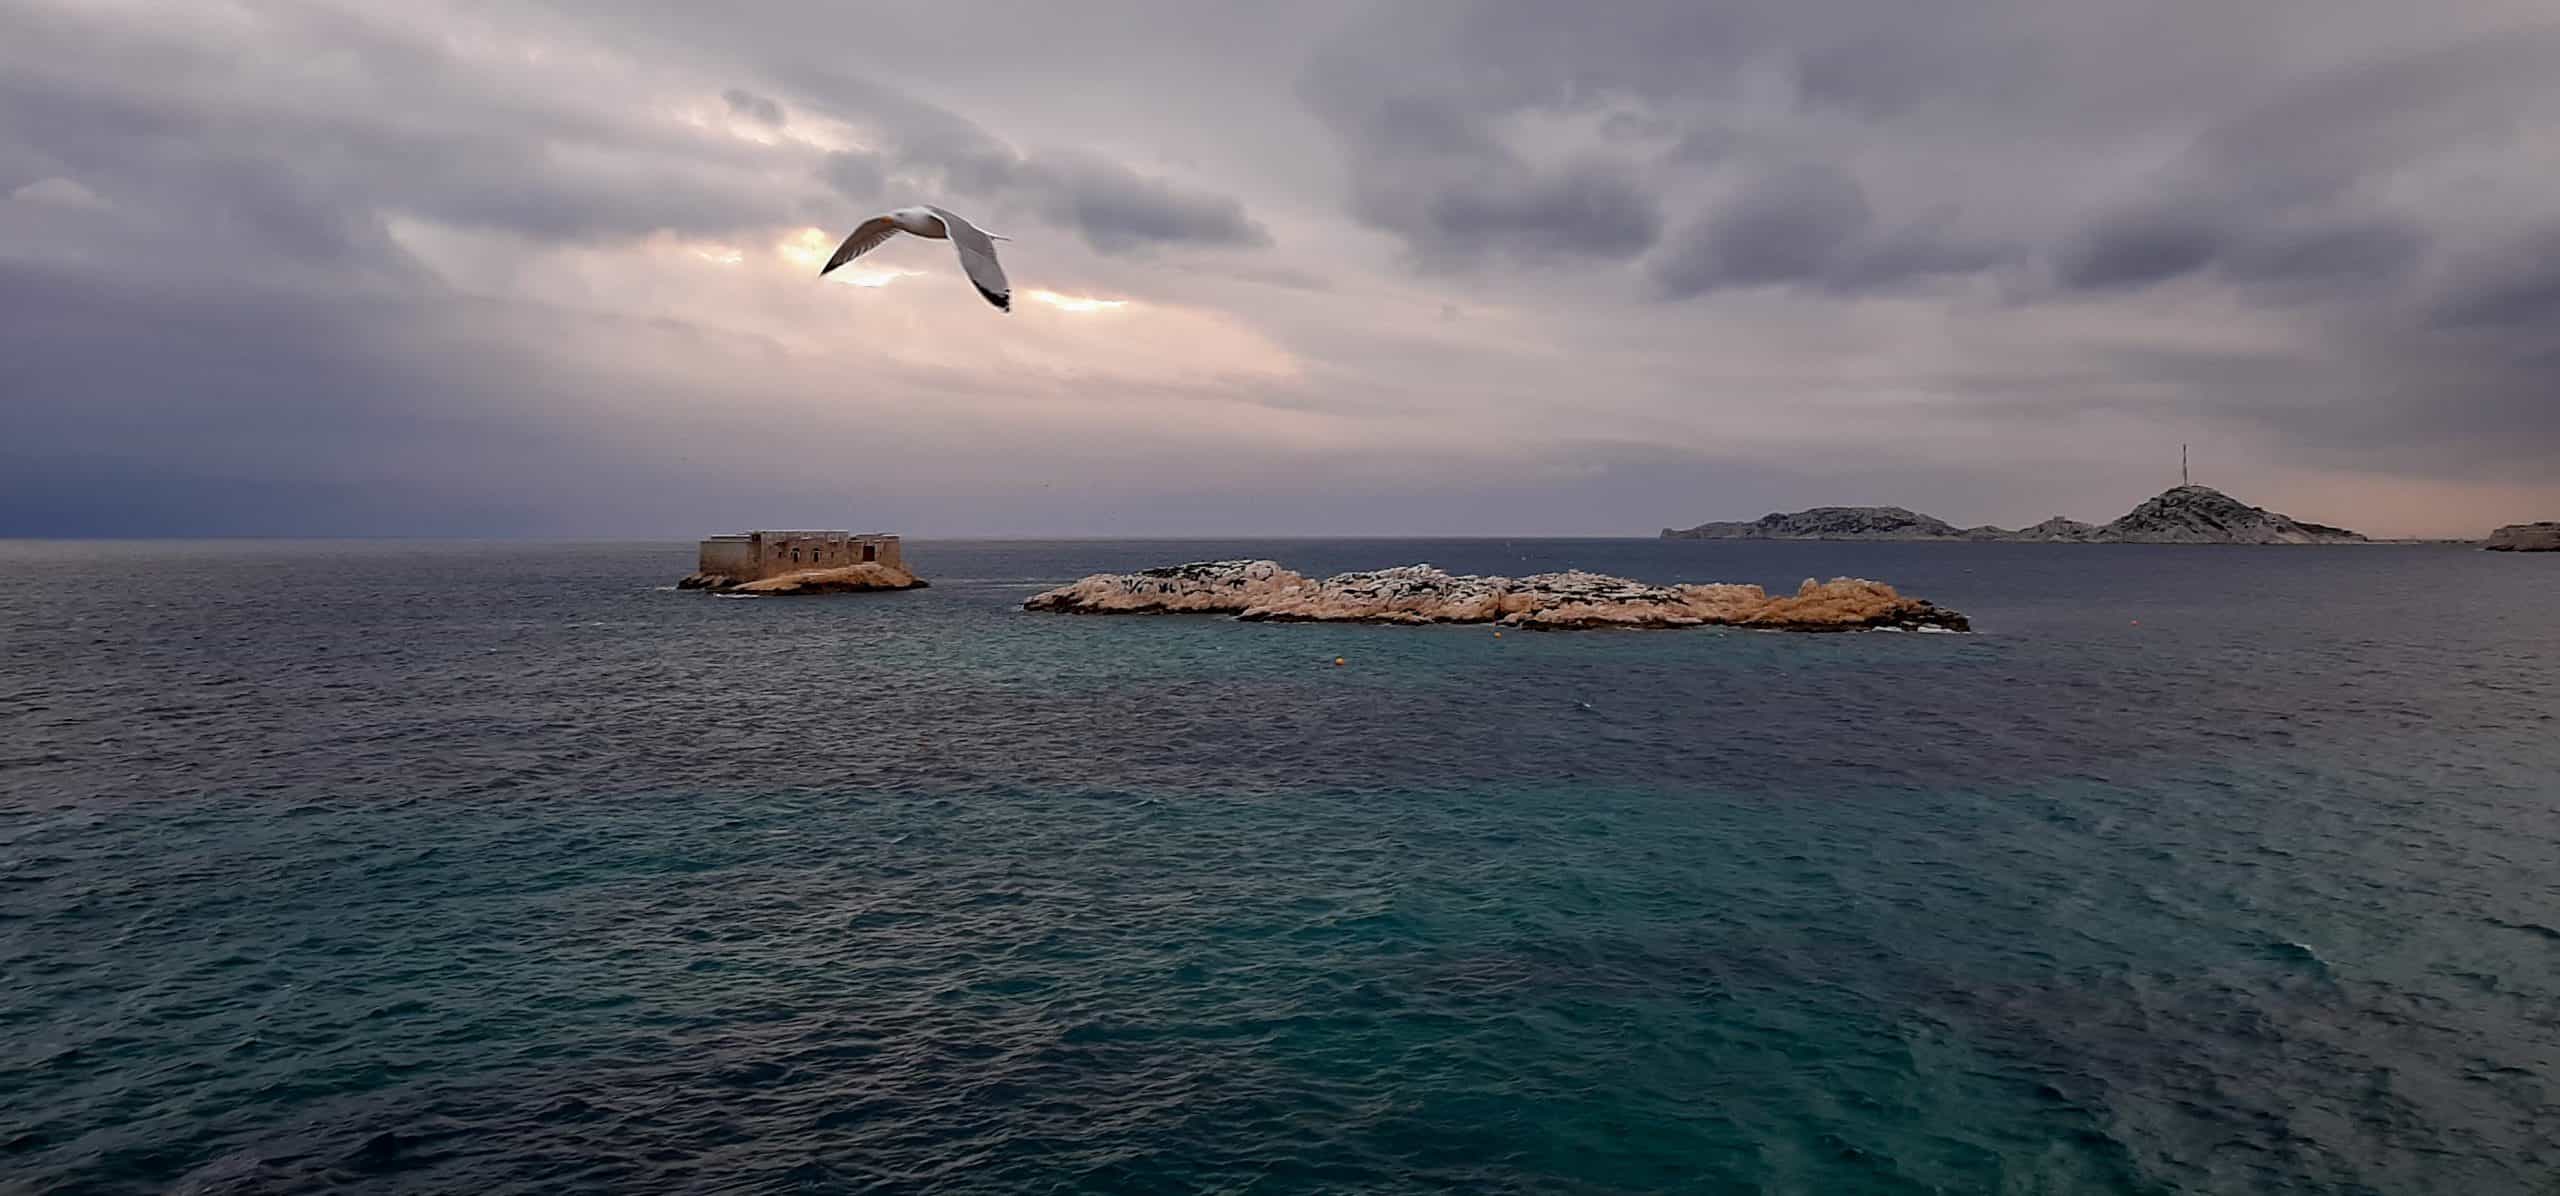 Goeland volant dans la baie de Marseille Photo Bernard Tarrius